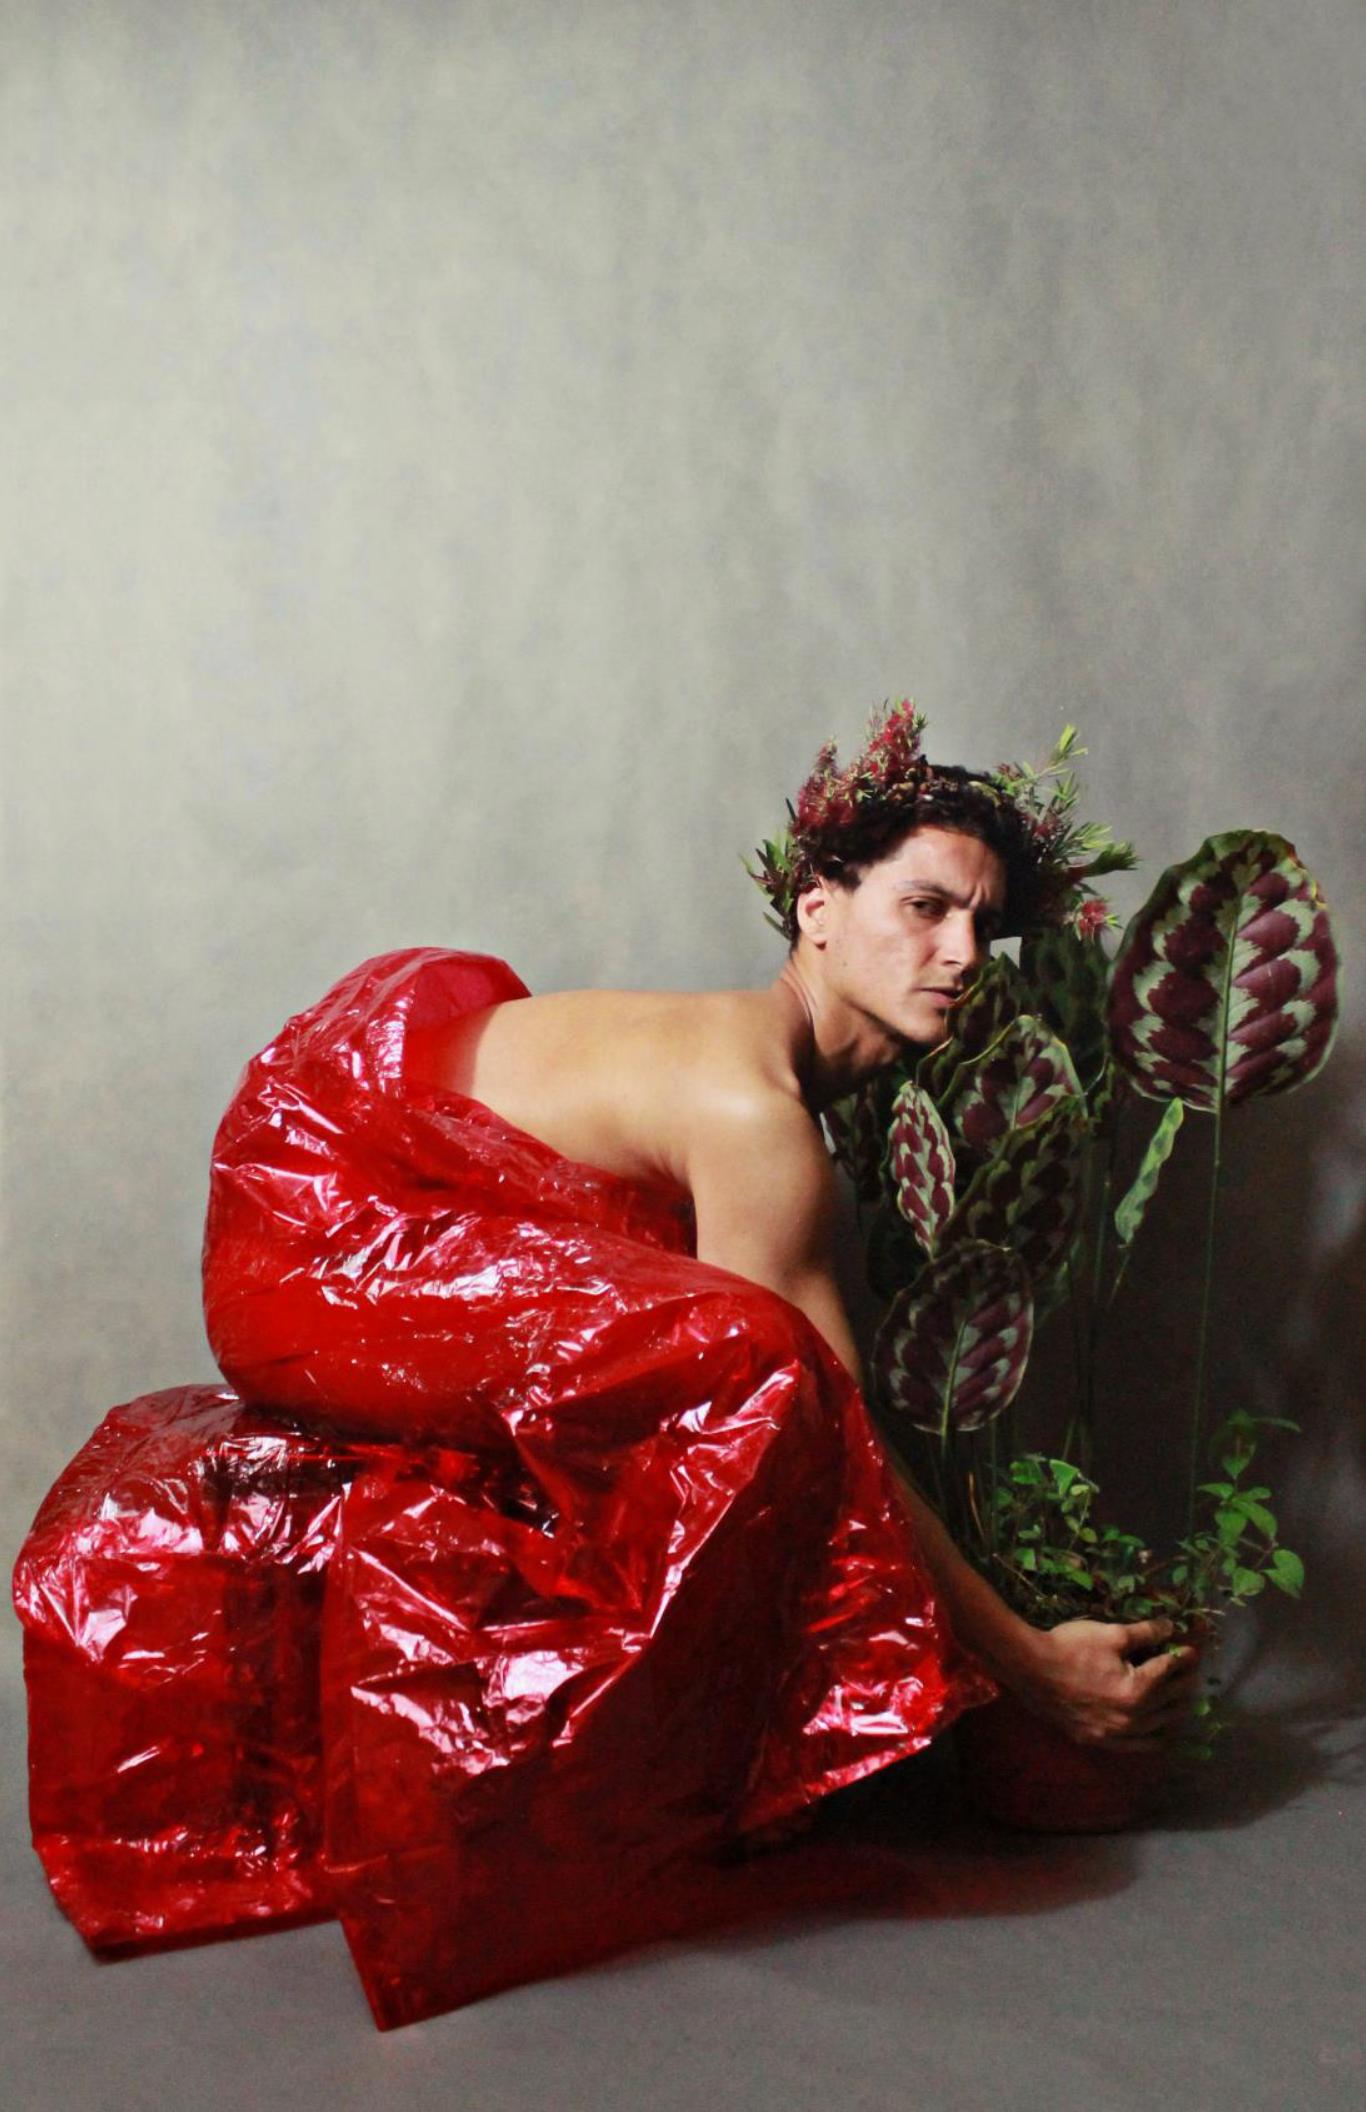 Jose Sierra Color Photograph - Untitled I. Self Portrait. Limited Edition Color Nude Photograph